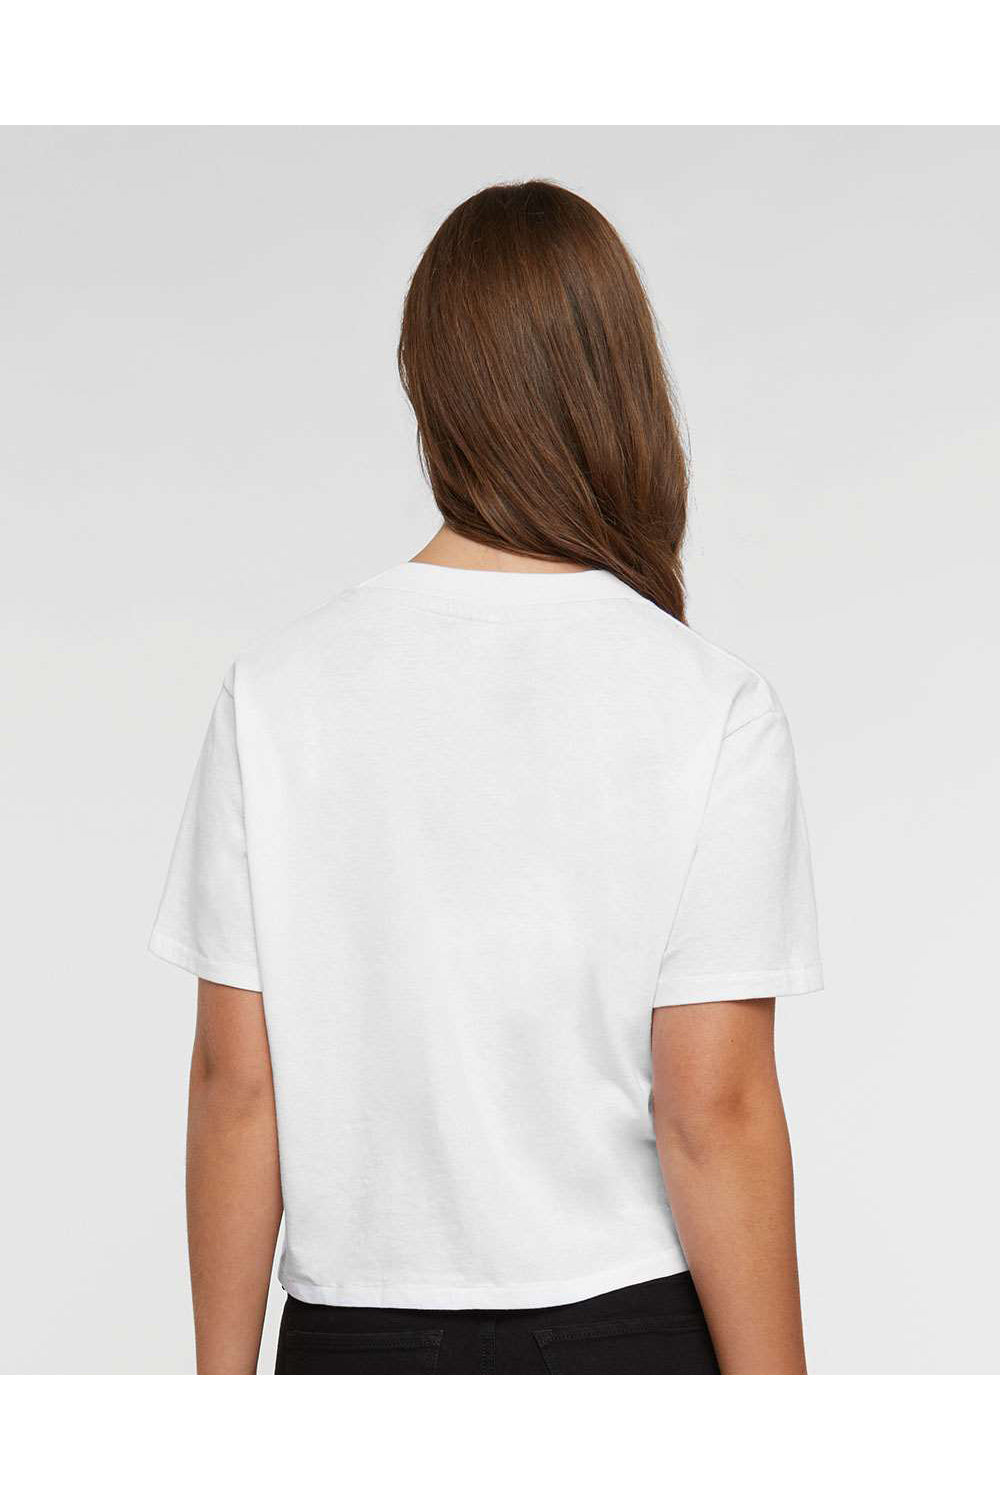 LAT 3518 Womens Boxy Short Sleeve Crewneck T-Shirt Blended White Model Back